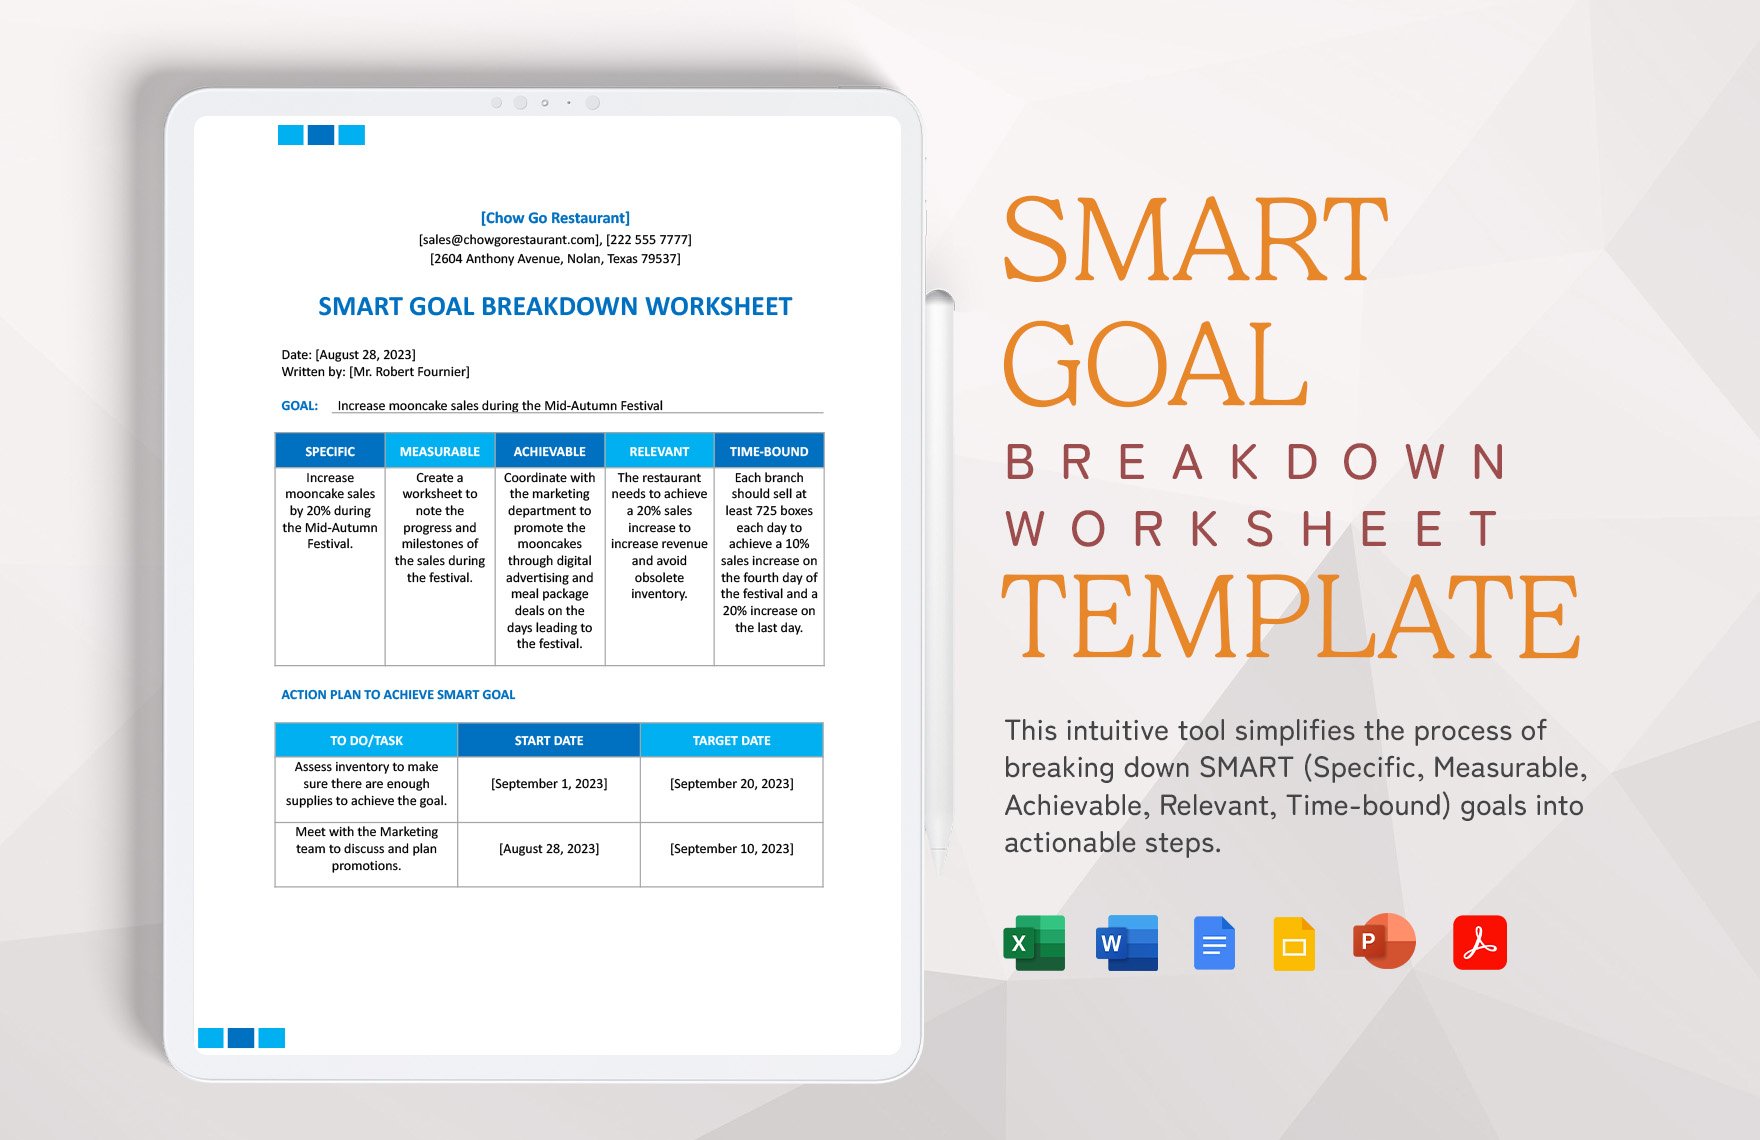 Smart Goal Breakdown Worksheet Template